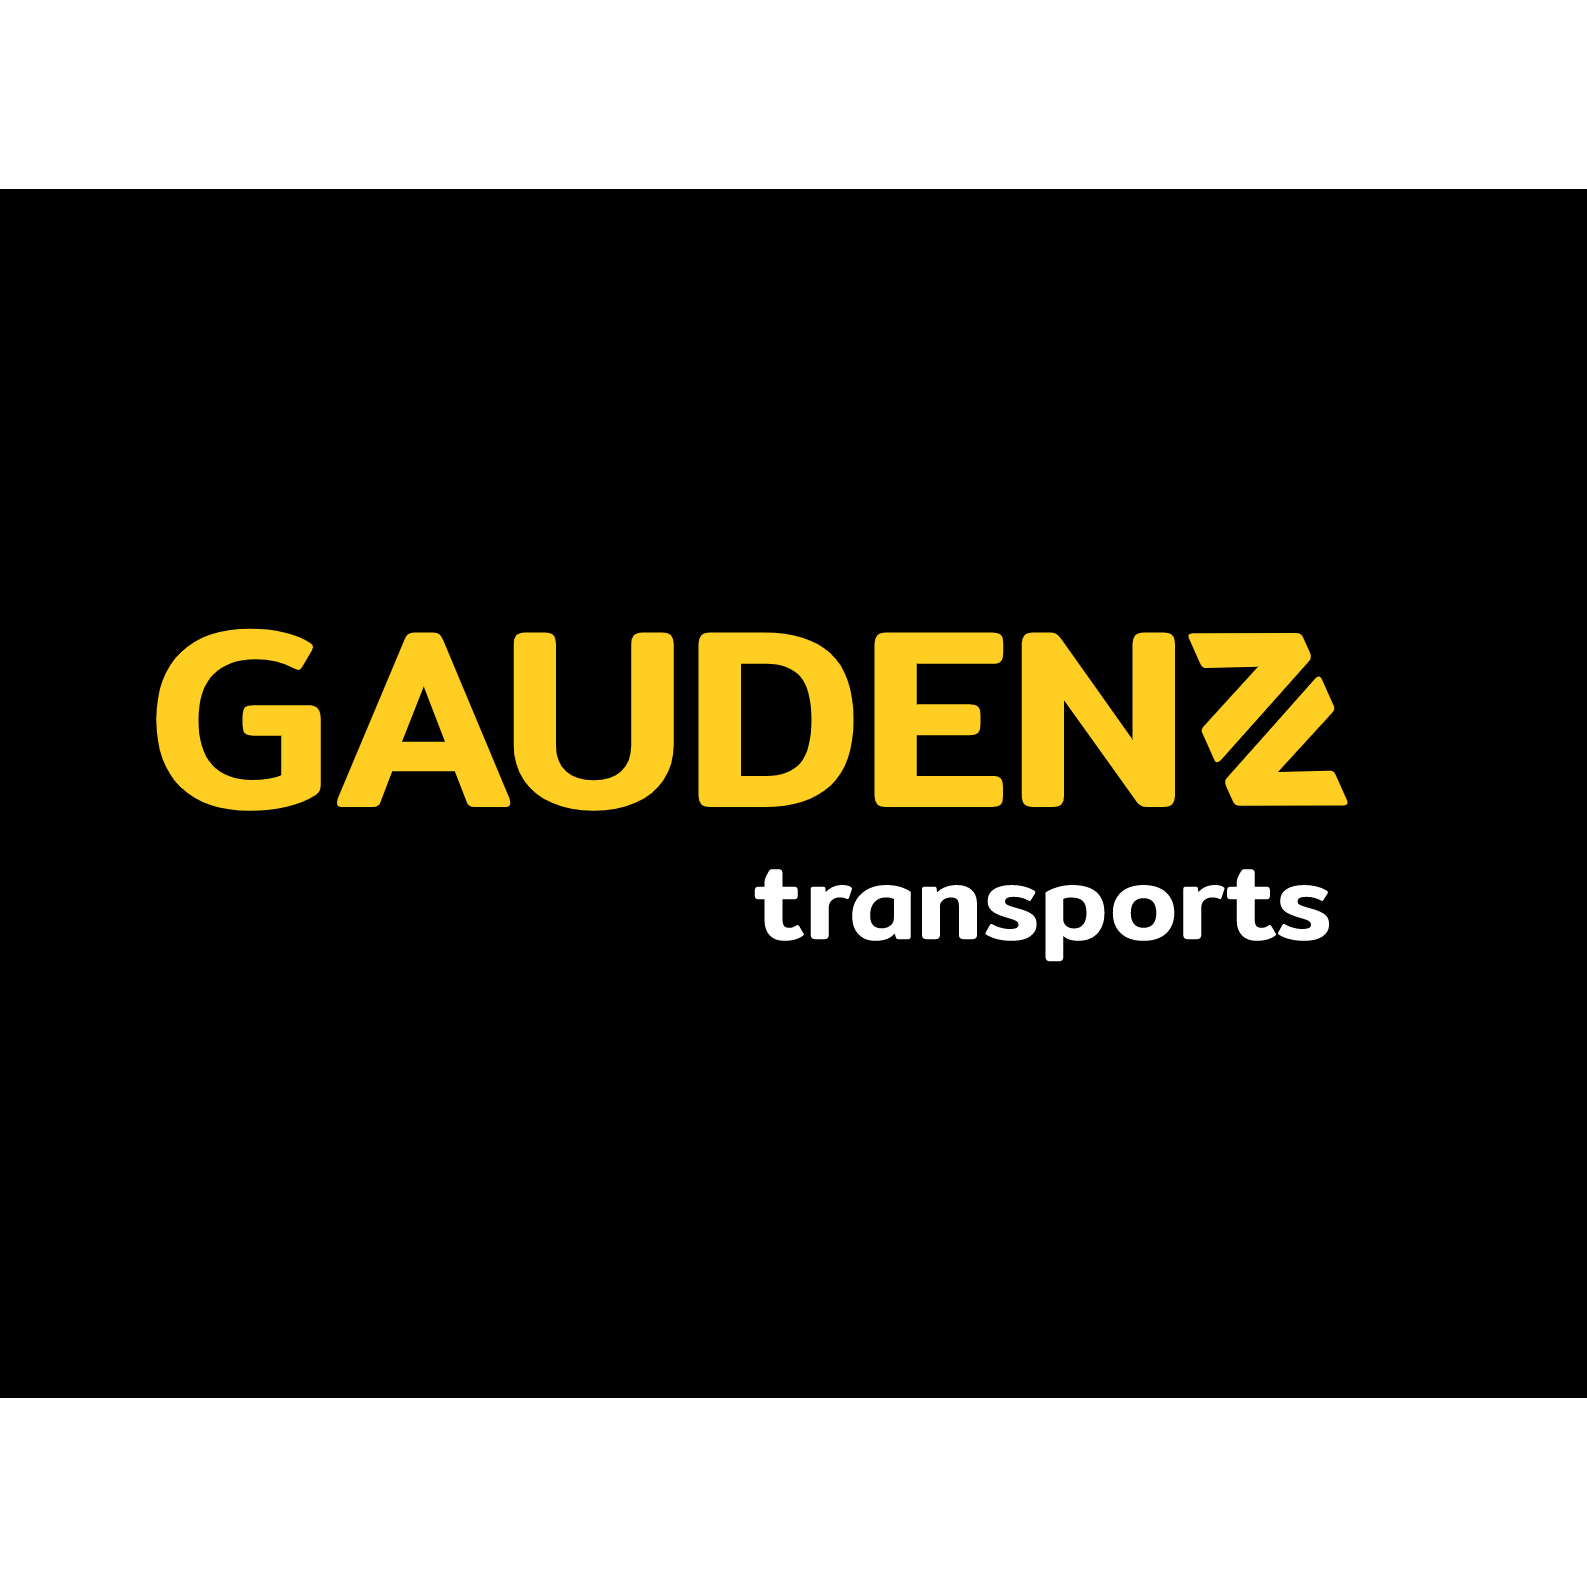 GAUDENZ transports Logo